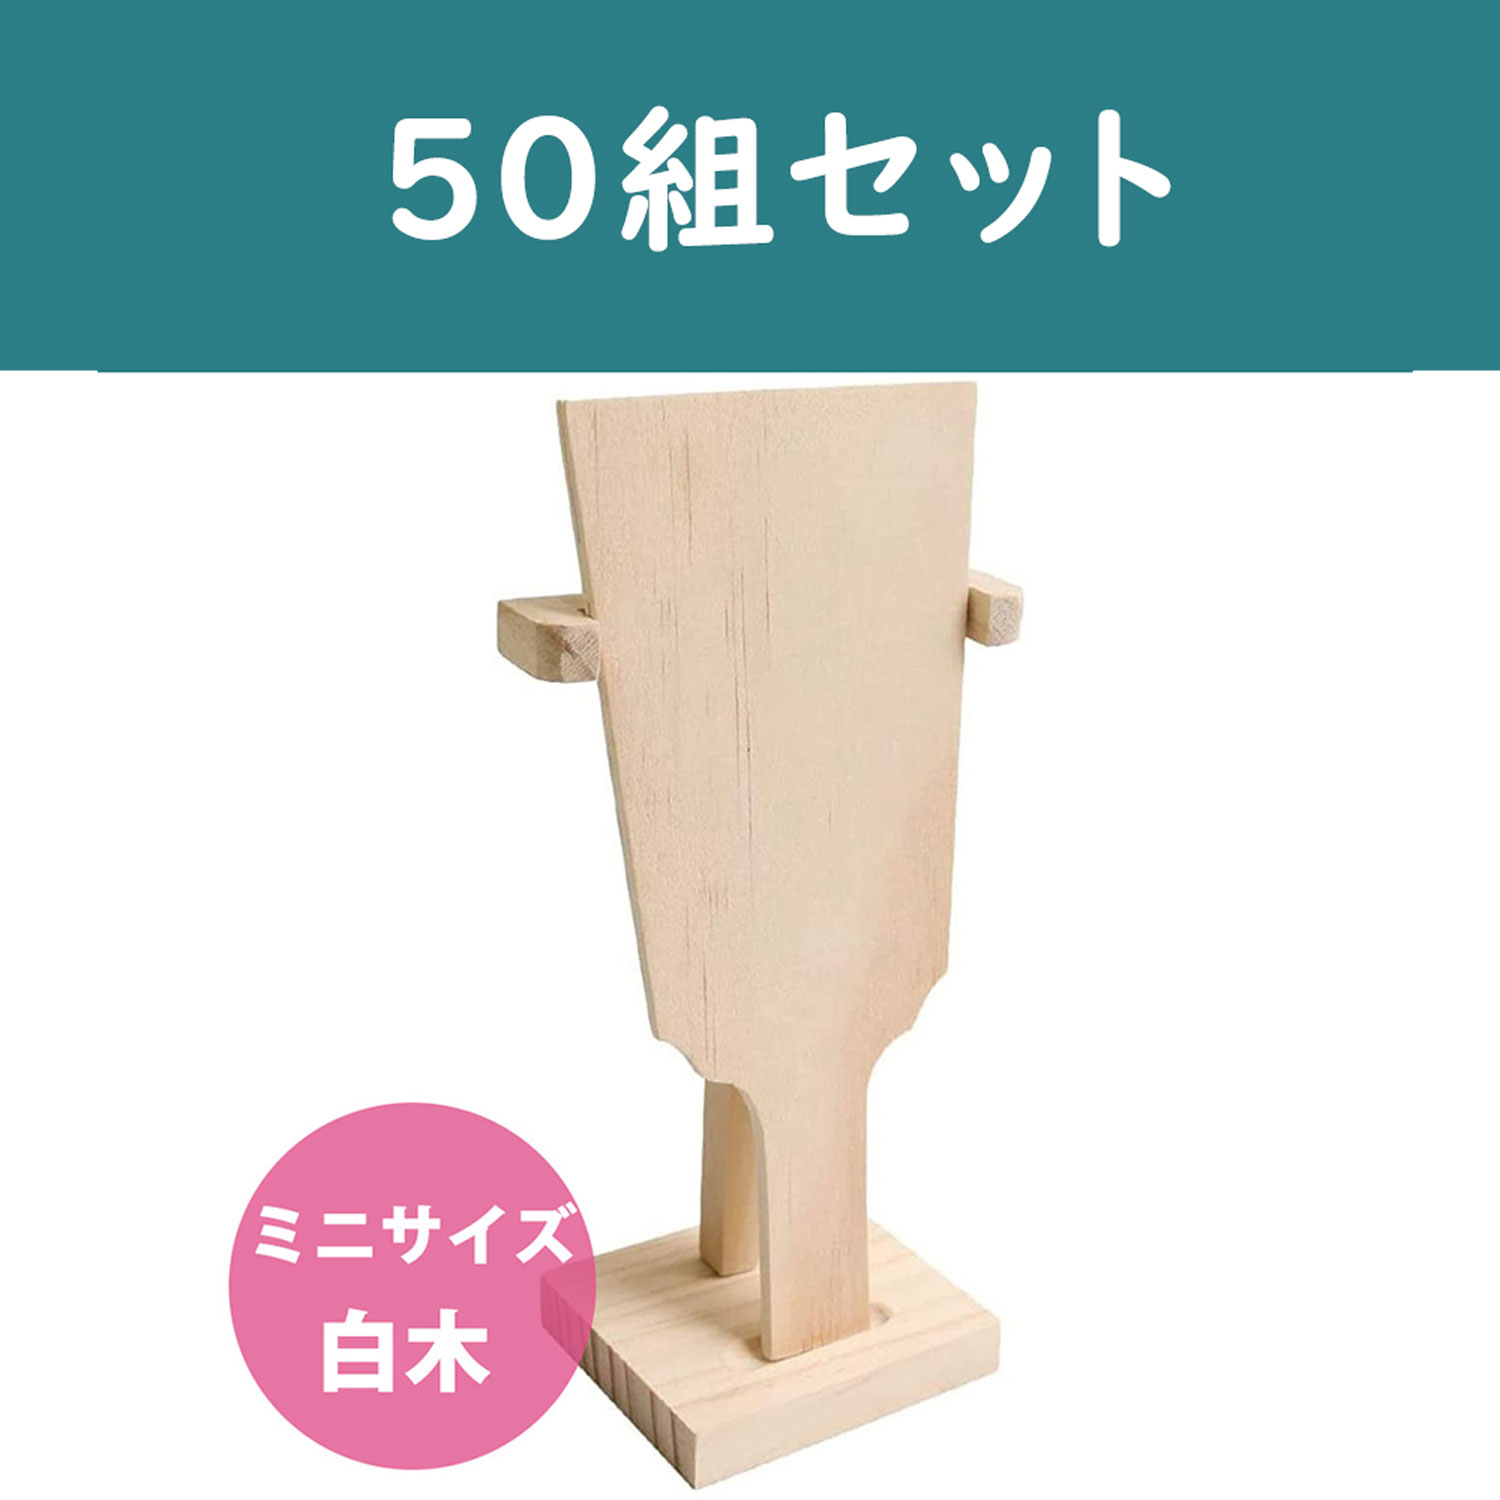 CC1290-50 Mini Hagoita (Decorative Base) Light Wood with Stand 50sets (set)